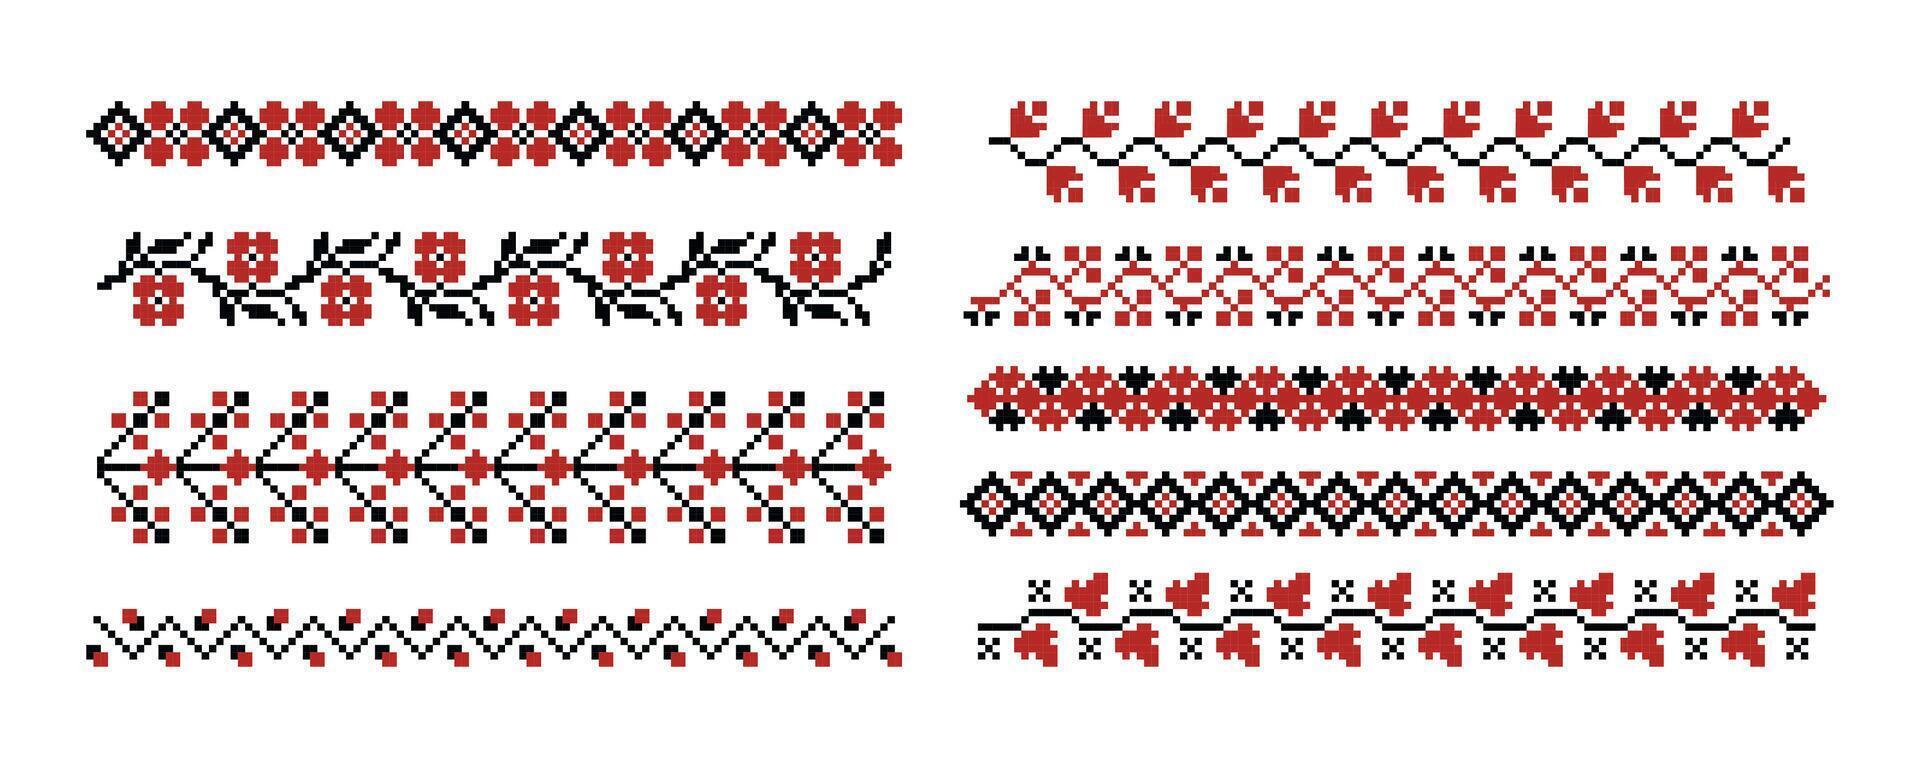 Traditional Ukrainian embroidery. Ukrainian folk border, ethnic slavic retro needlecraft elements, decorative repeat pattern. Vector ornamental set